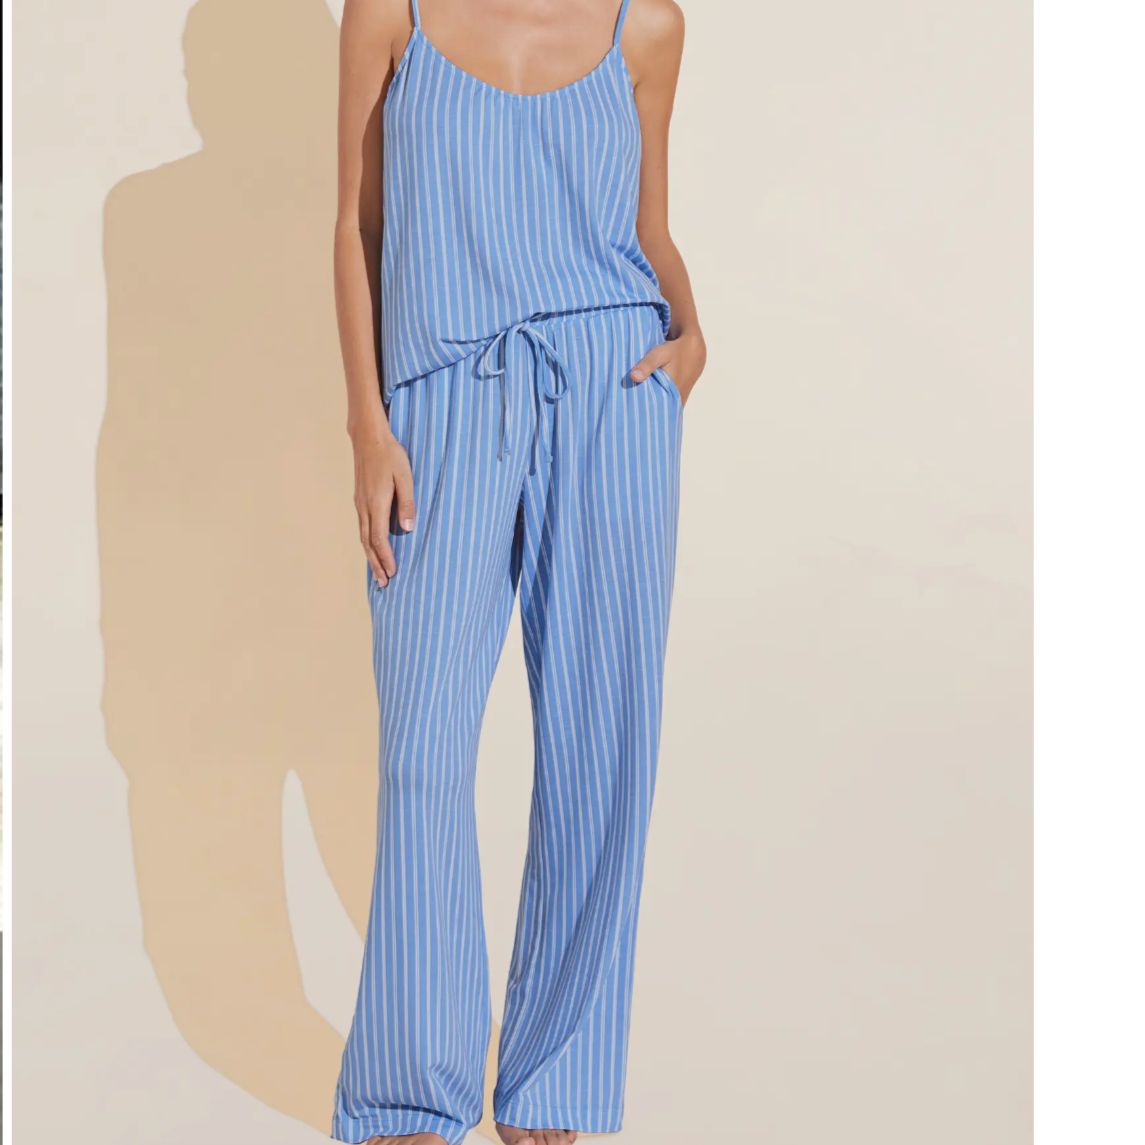 Eberjey Gisele Cami and Pant PJ Set C1141Z-Loungewear-Eberjey-Blue Stripe-XSmall-Anna Bella Fine Lingerie, Reveal Your Most Gorgeous Self!